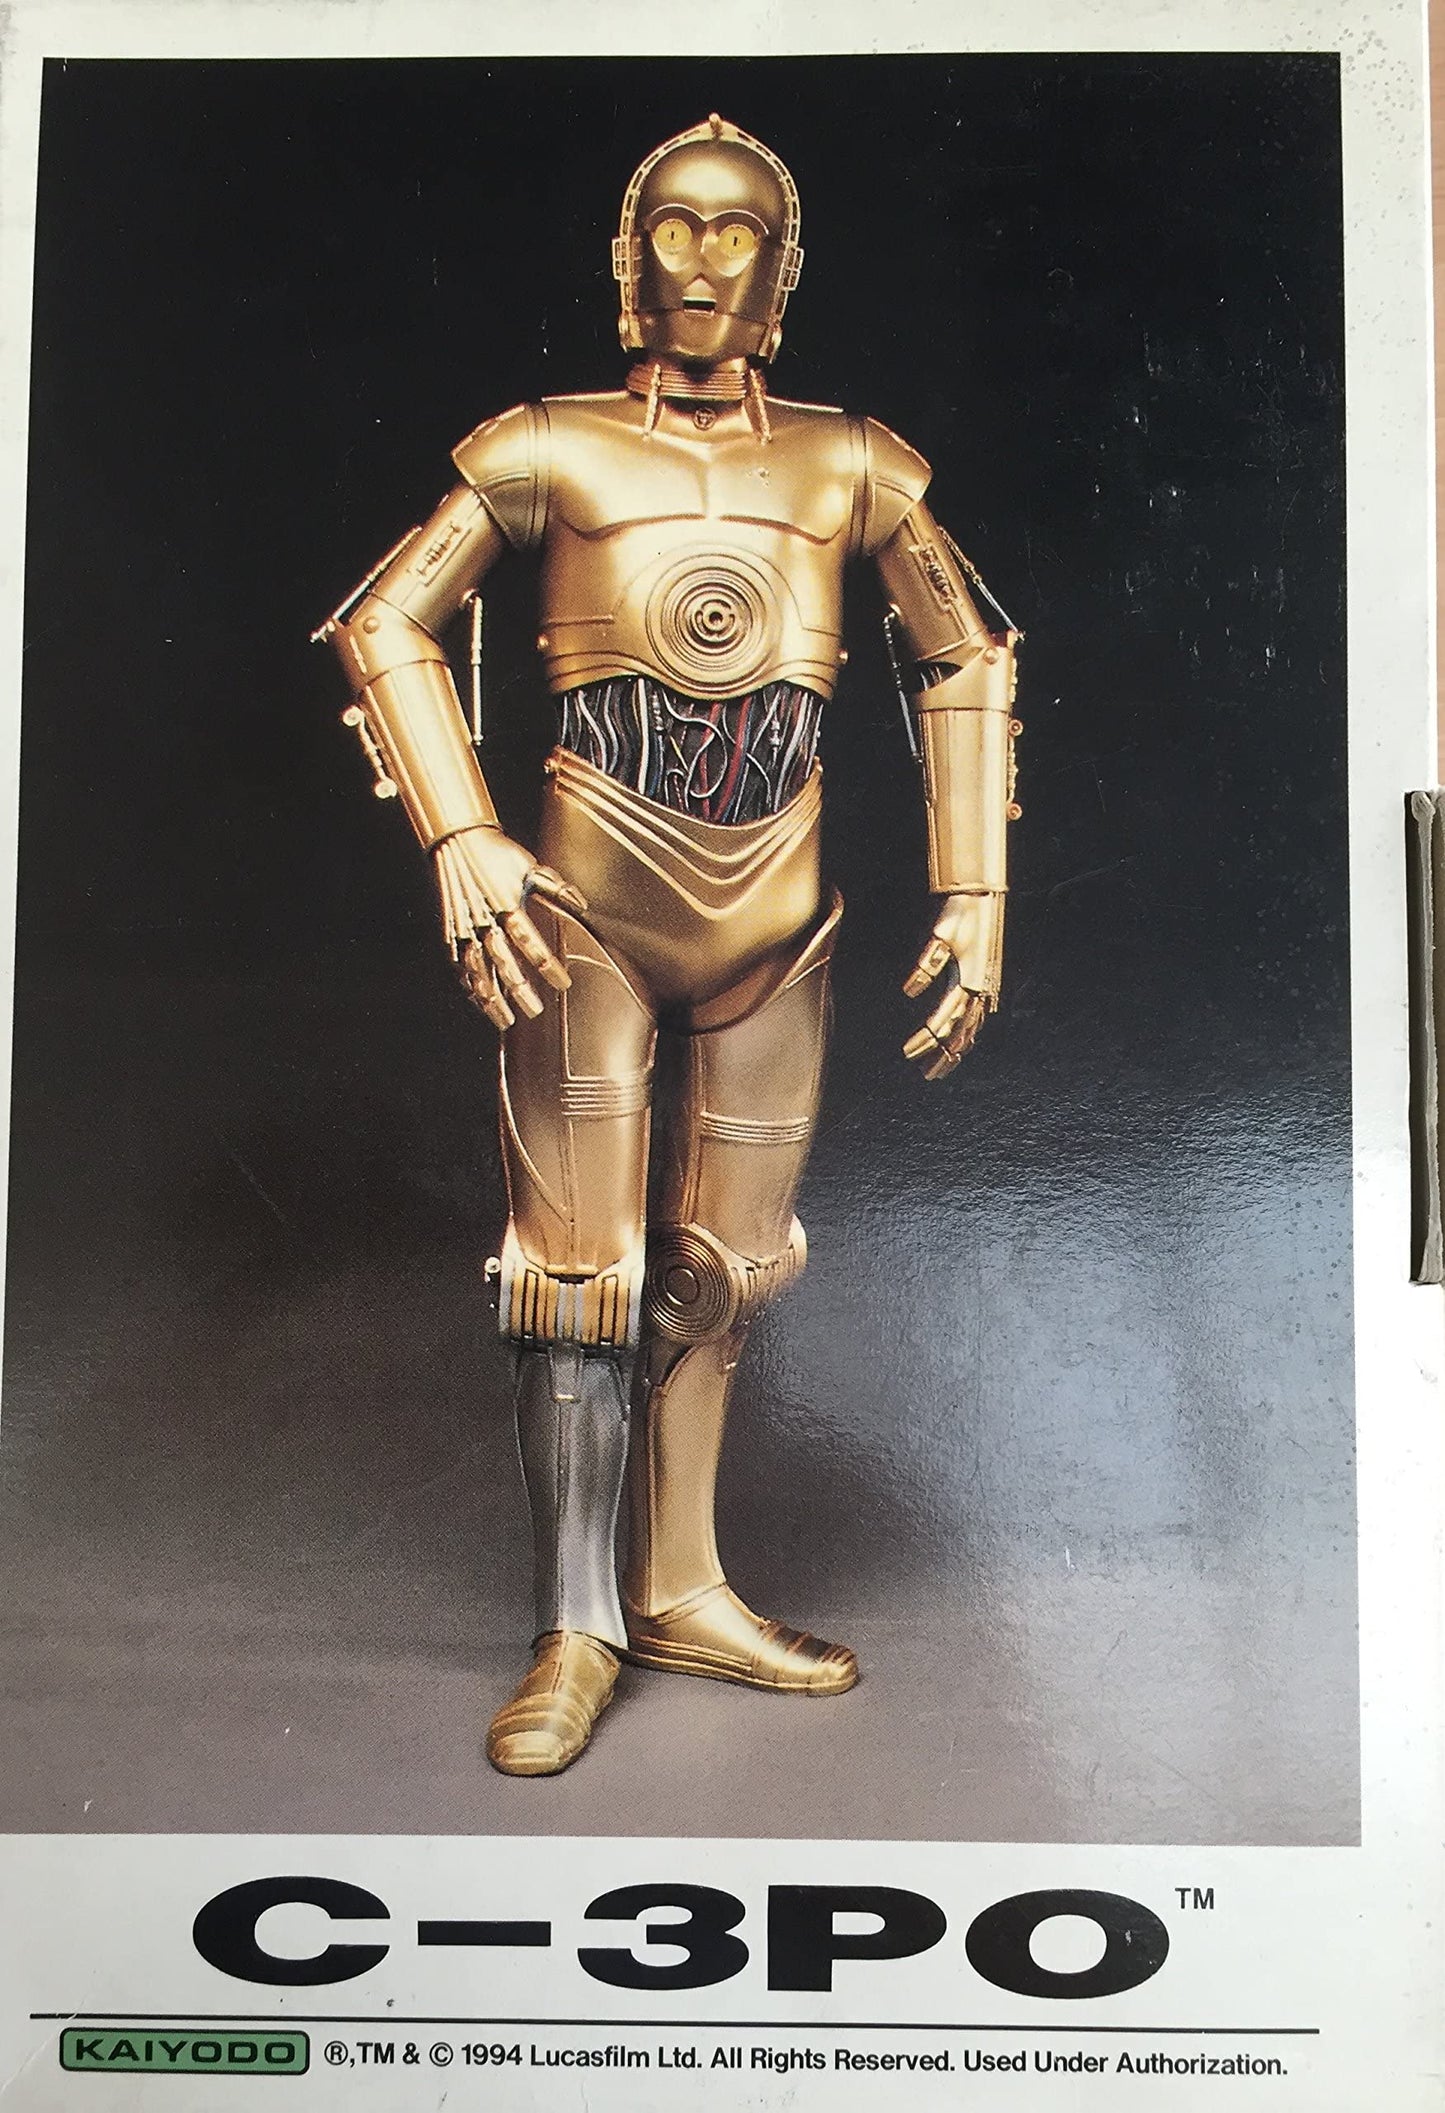 Vintage 1994 Ultra Rare Star Wars C-3PO Soft Vinyl Model Kit - Brand New Factory Sealed Shop Stock Room Find